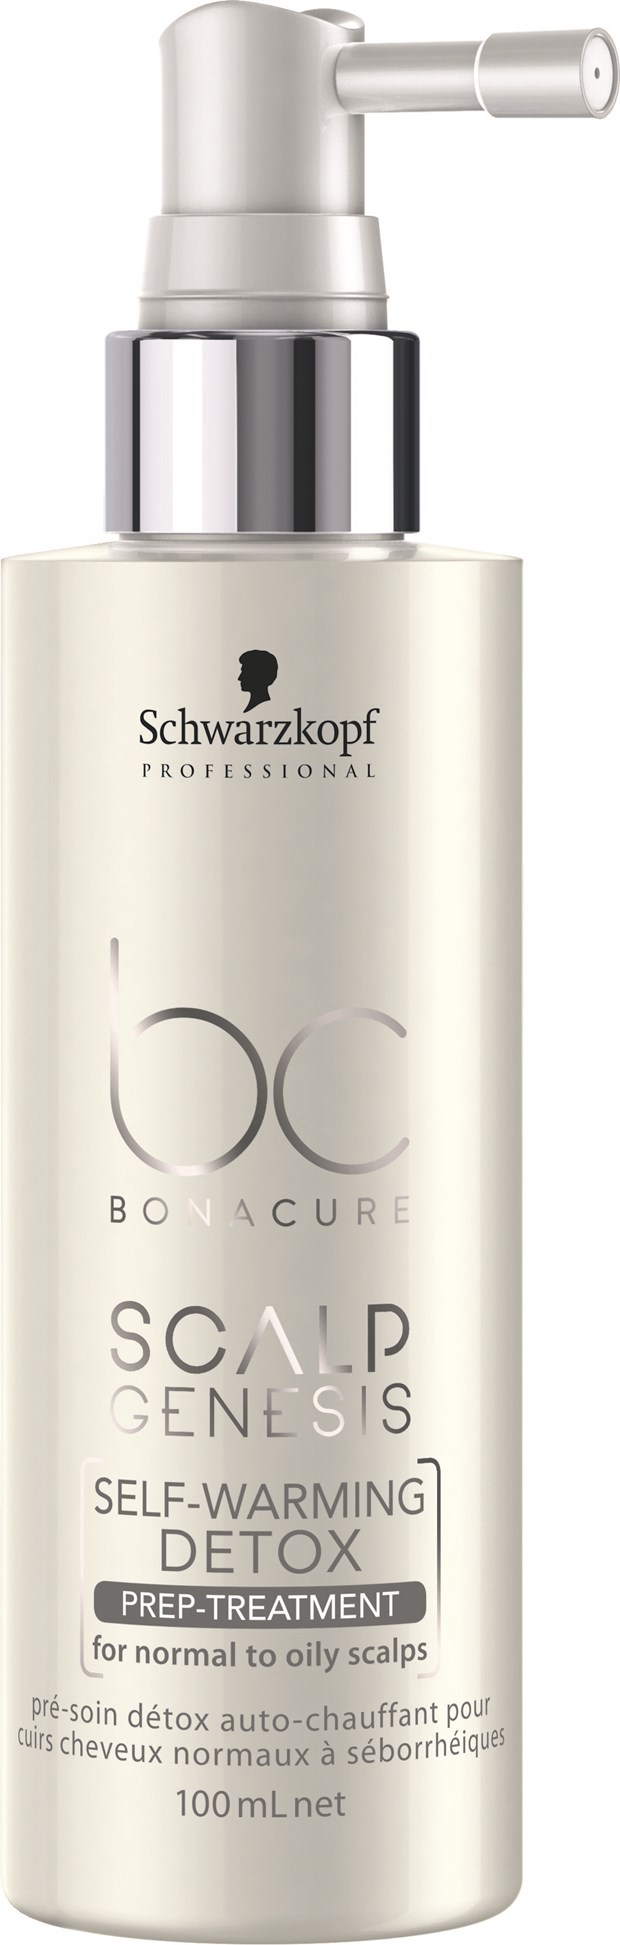 BonaCure Scalp Genesis Self-Warming Detox Prep-Treatment